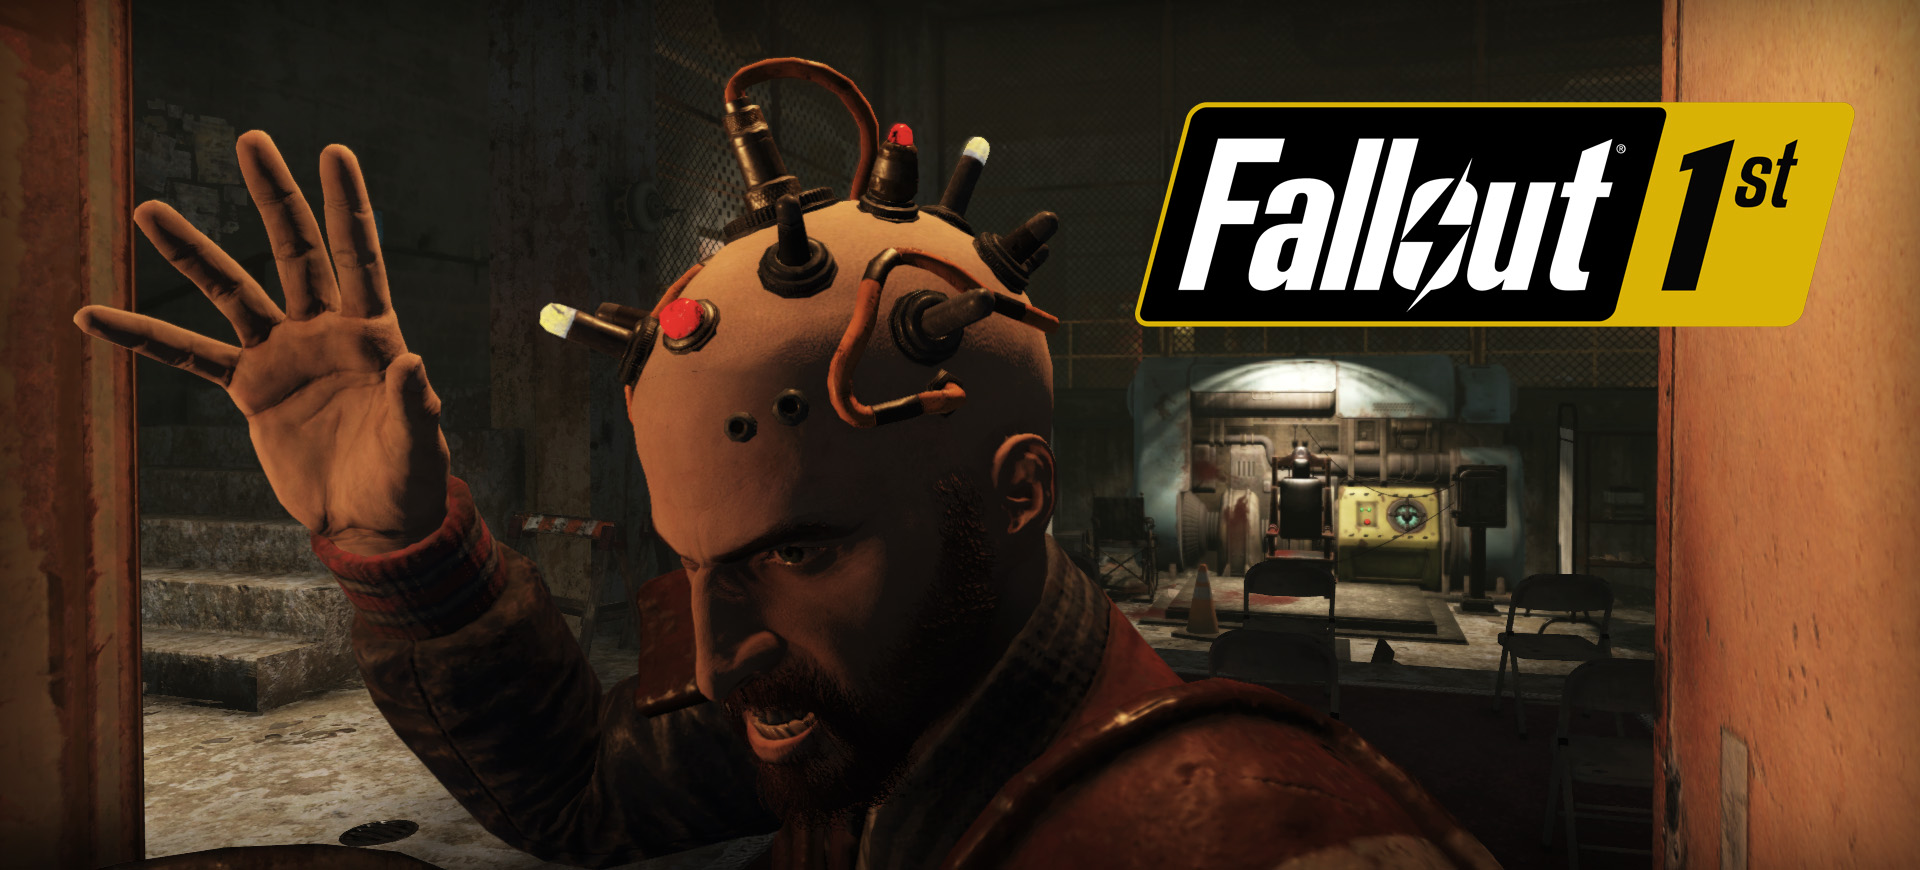 Fallout 76 – Zündkerzen-Frisur 1920x870